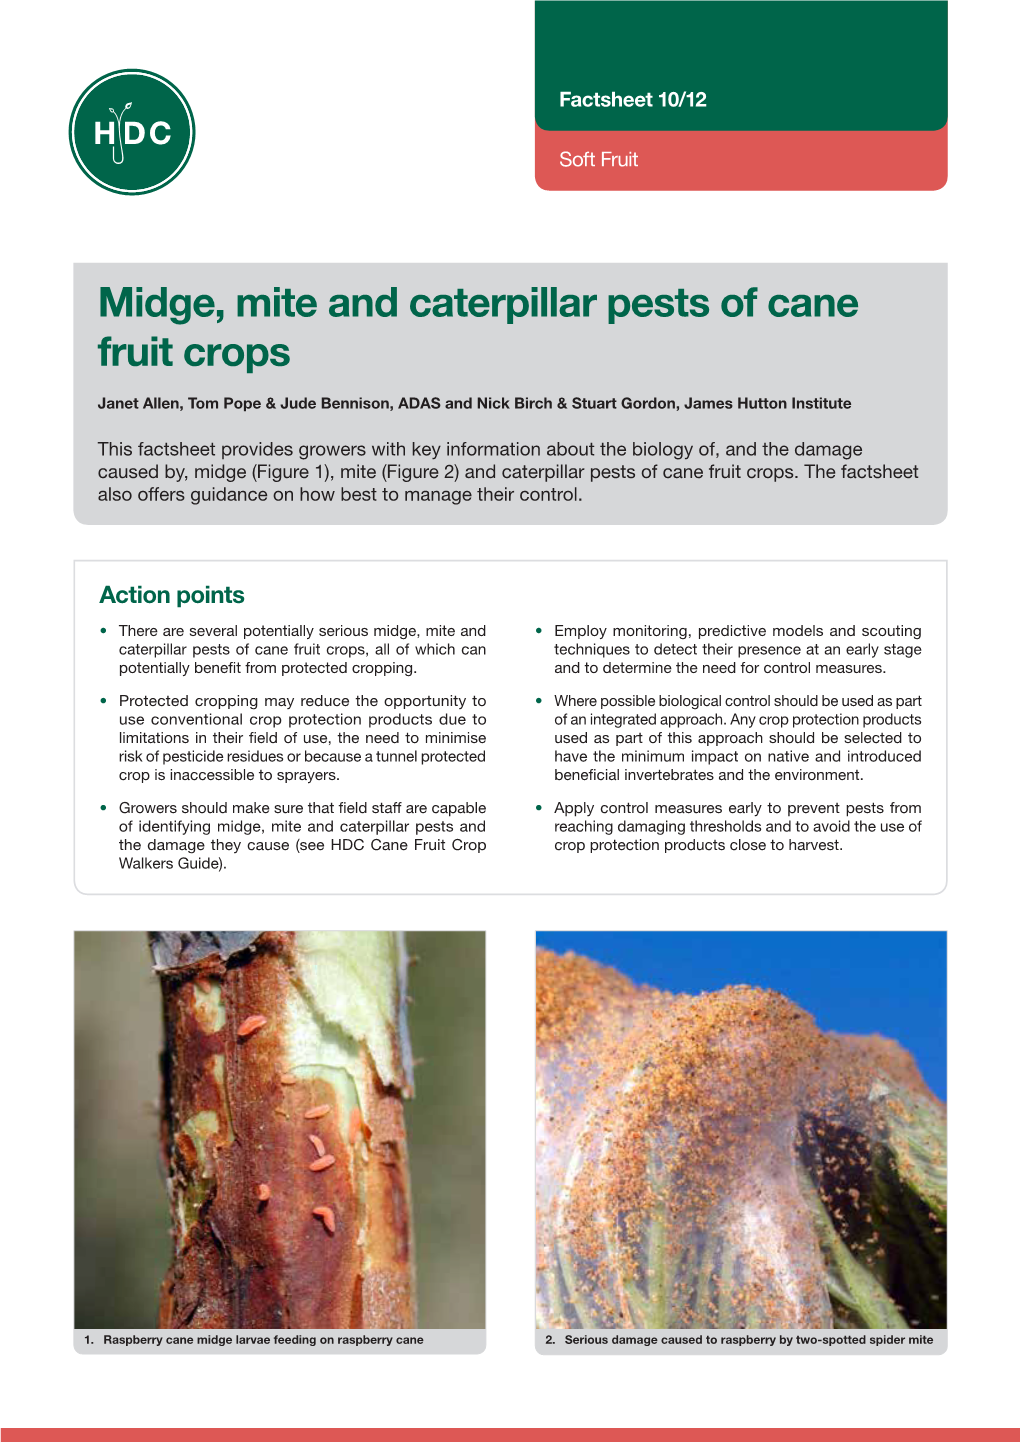 Midge, Mite and Caterpillar Pests of Cane Fruit Crops